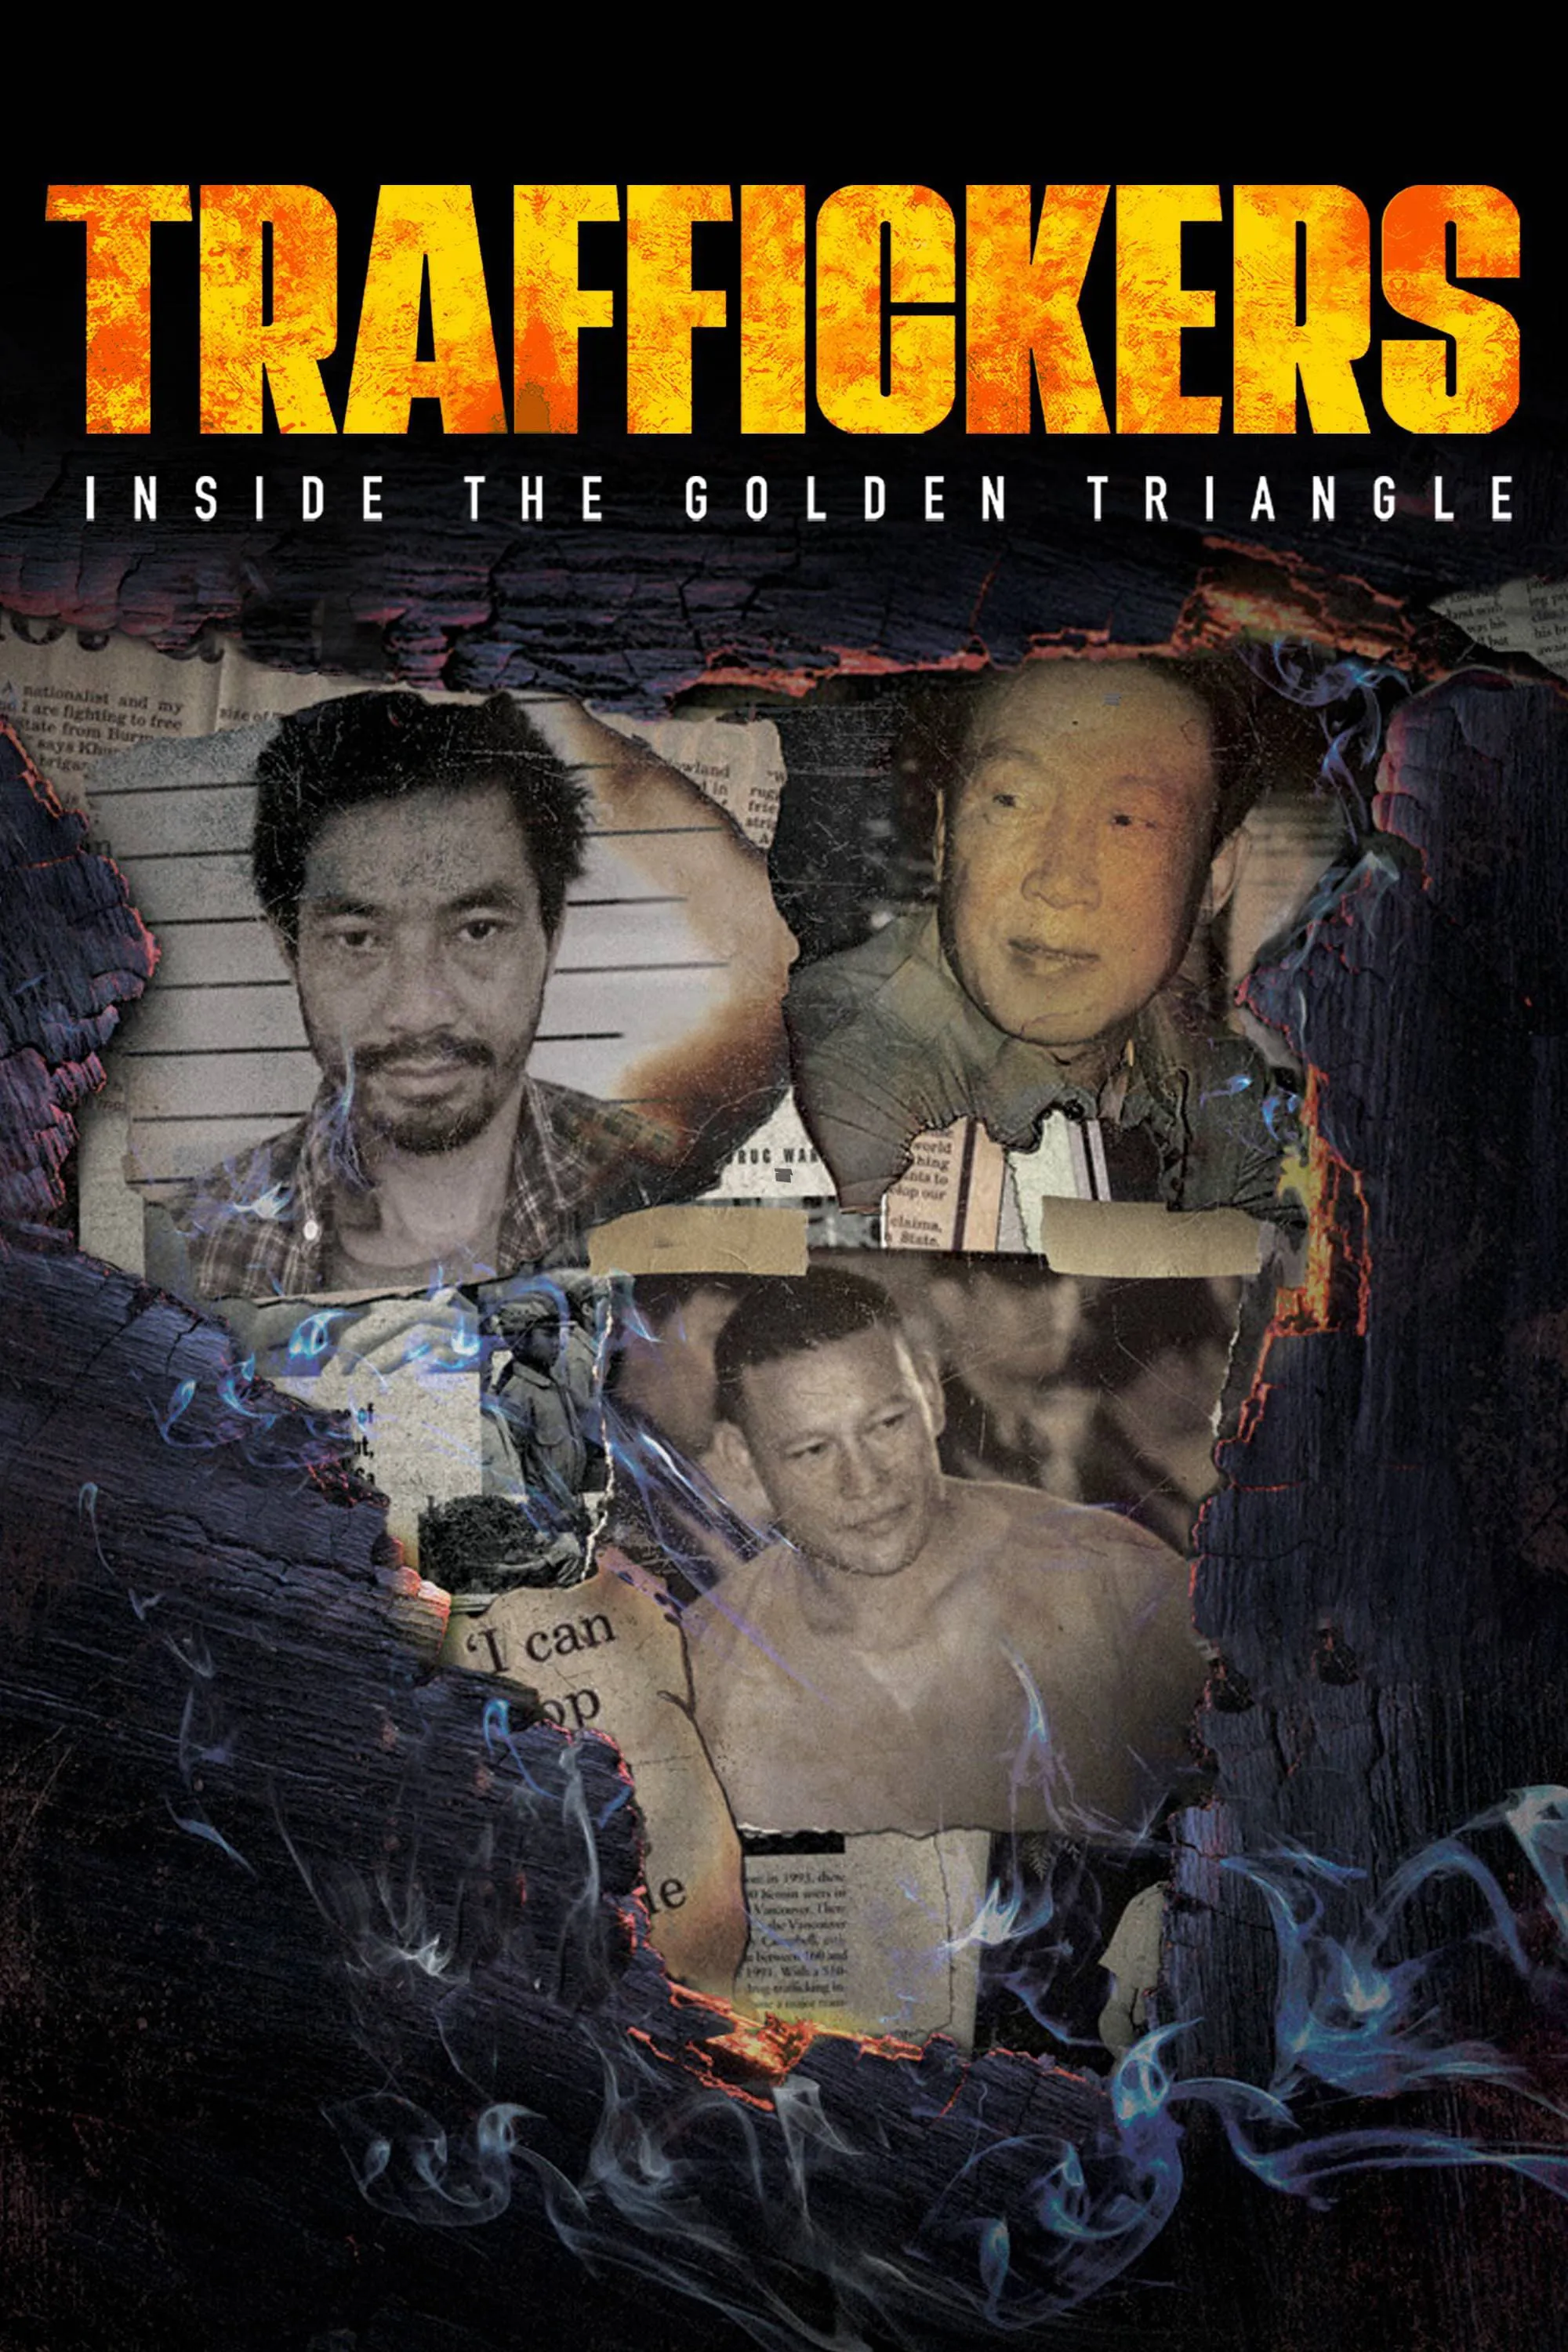 /media/15/traffickers-inside-the-golden-triangle-thumb.jpg